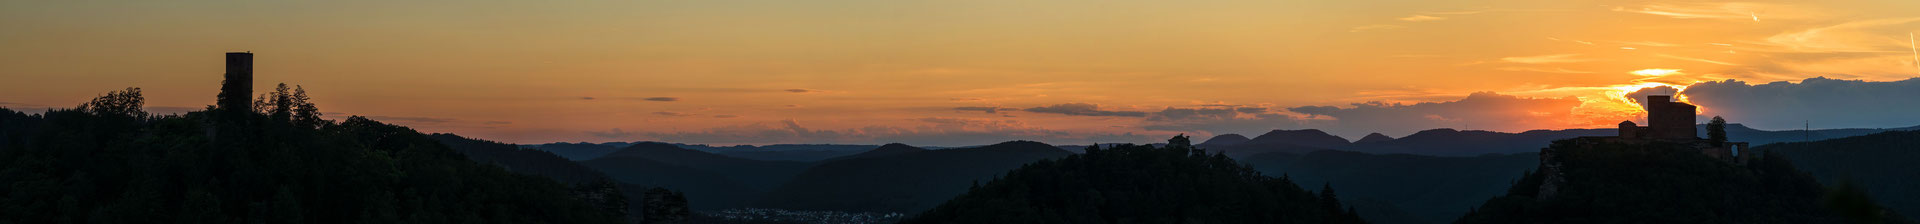 Sonnenuntergang am Slevogtfels